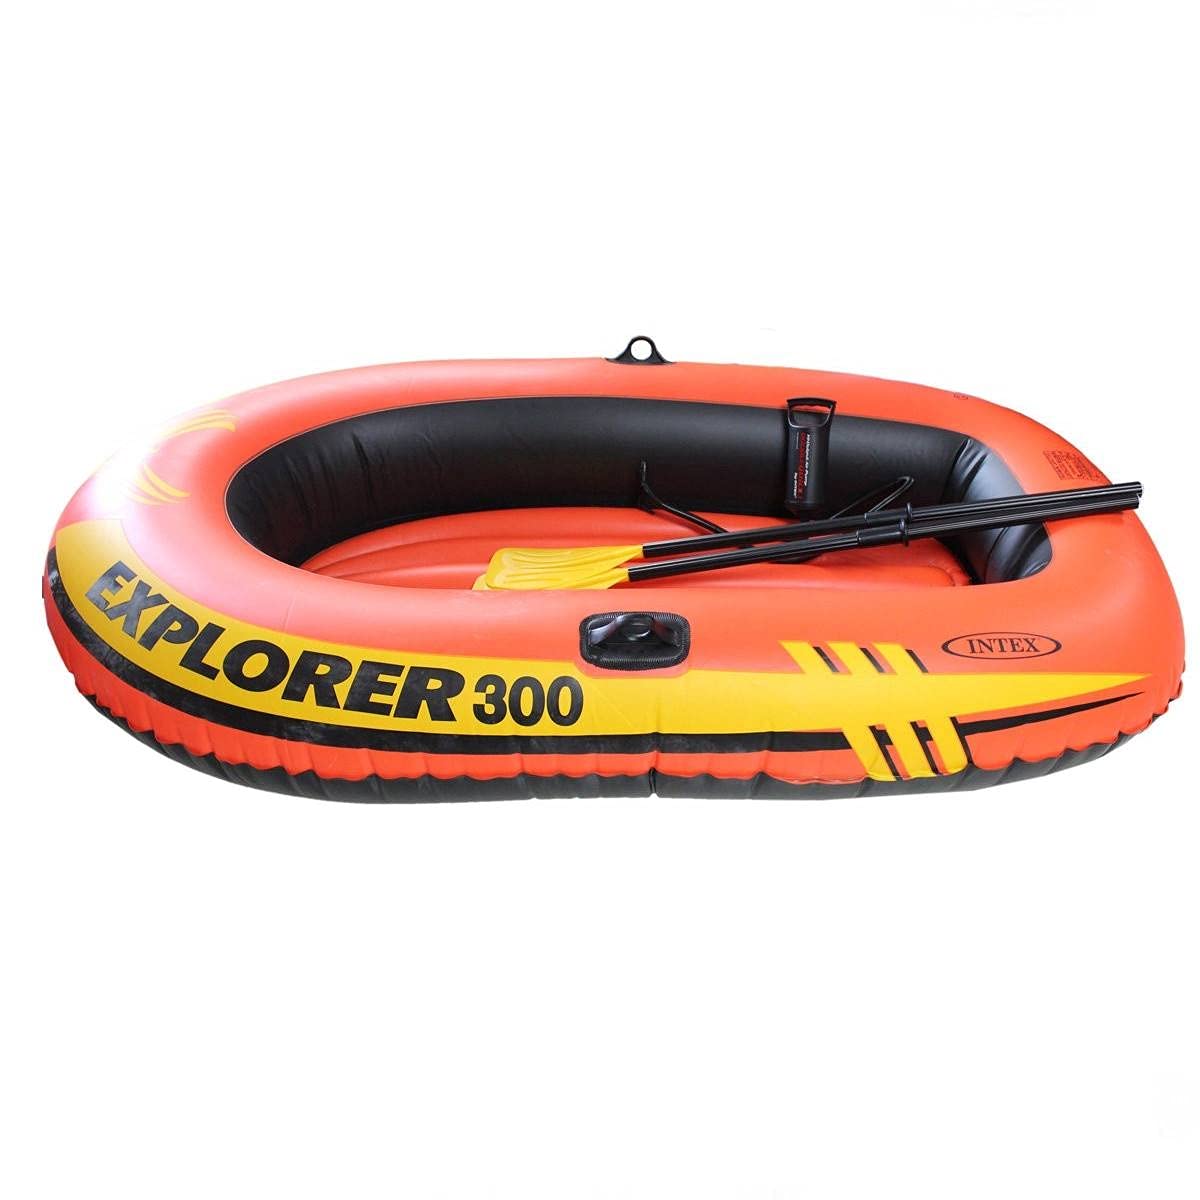 INTEX 58332 Boat Explorer 300 Set 8332 7.3 x 46.1 inches (211 x 117 x 41 cm) with All Pump